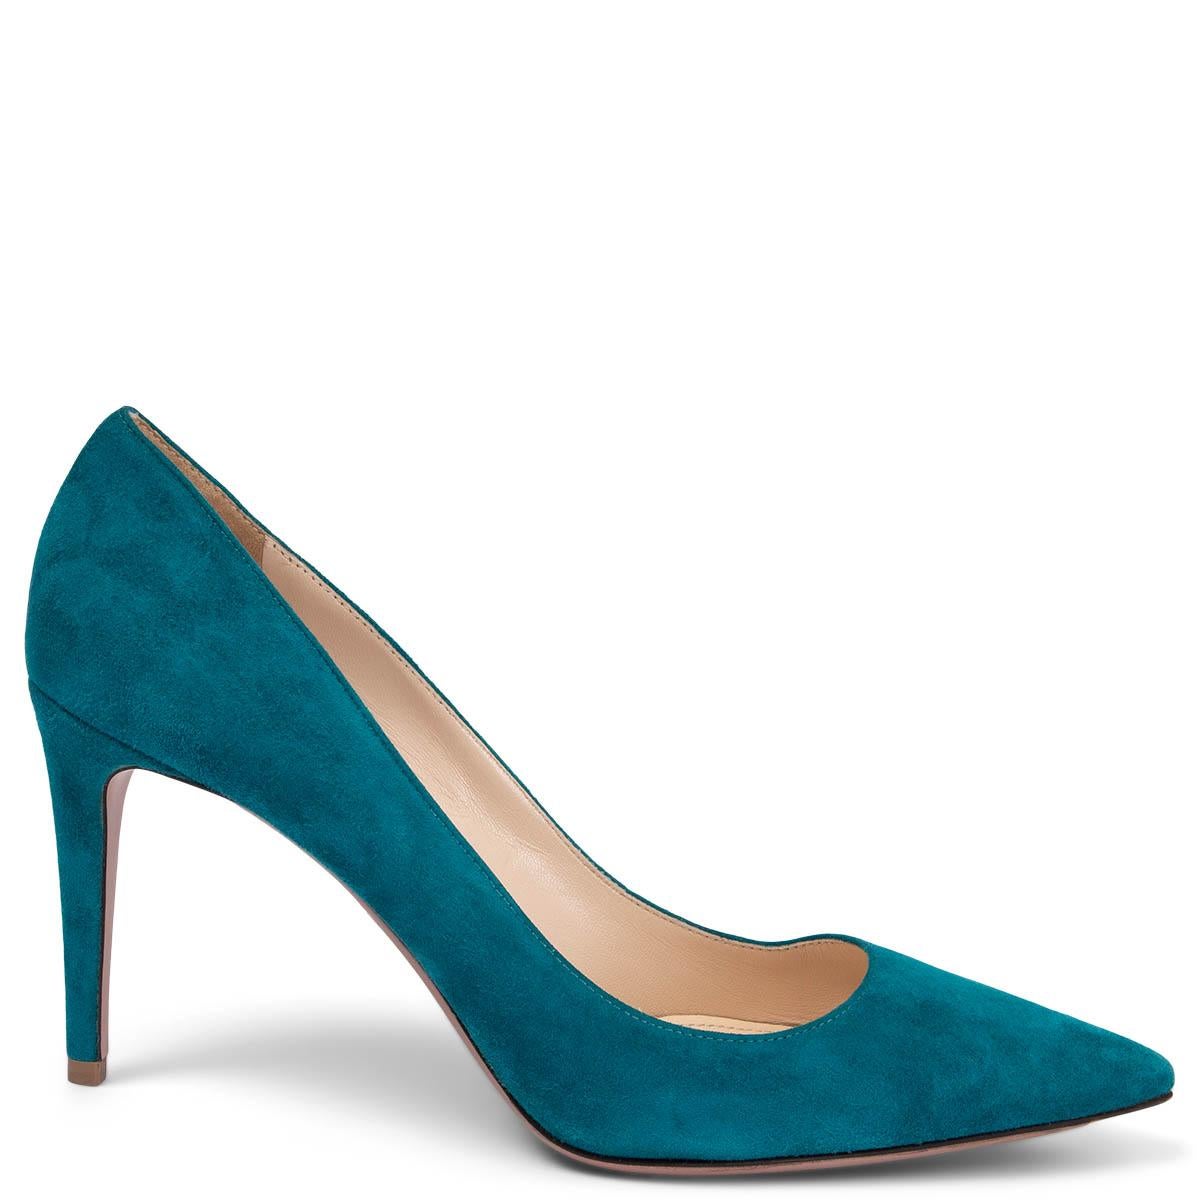 Chaussures  bout pointu CLASSIC en daim bleu ptrole Prada, Taille 40,5 en vente